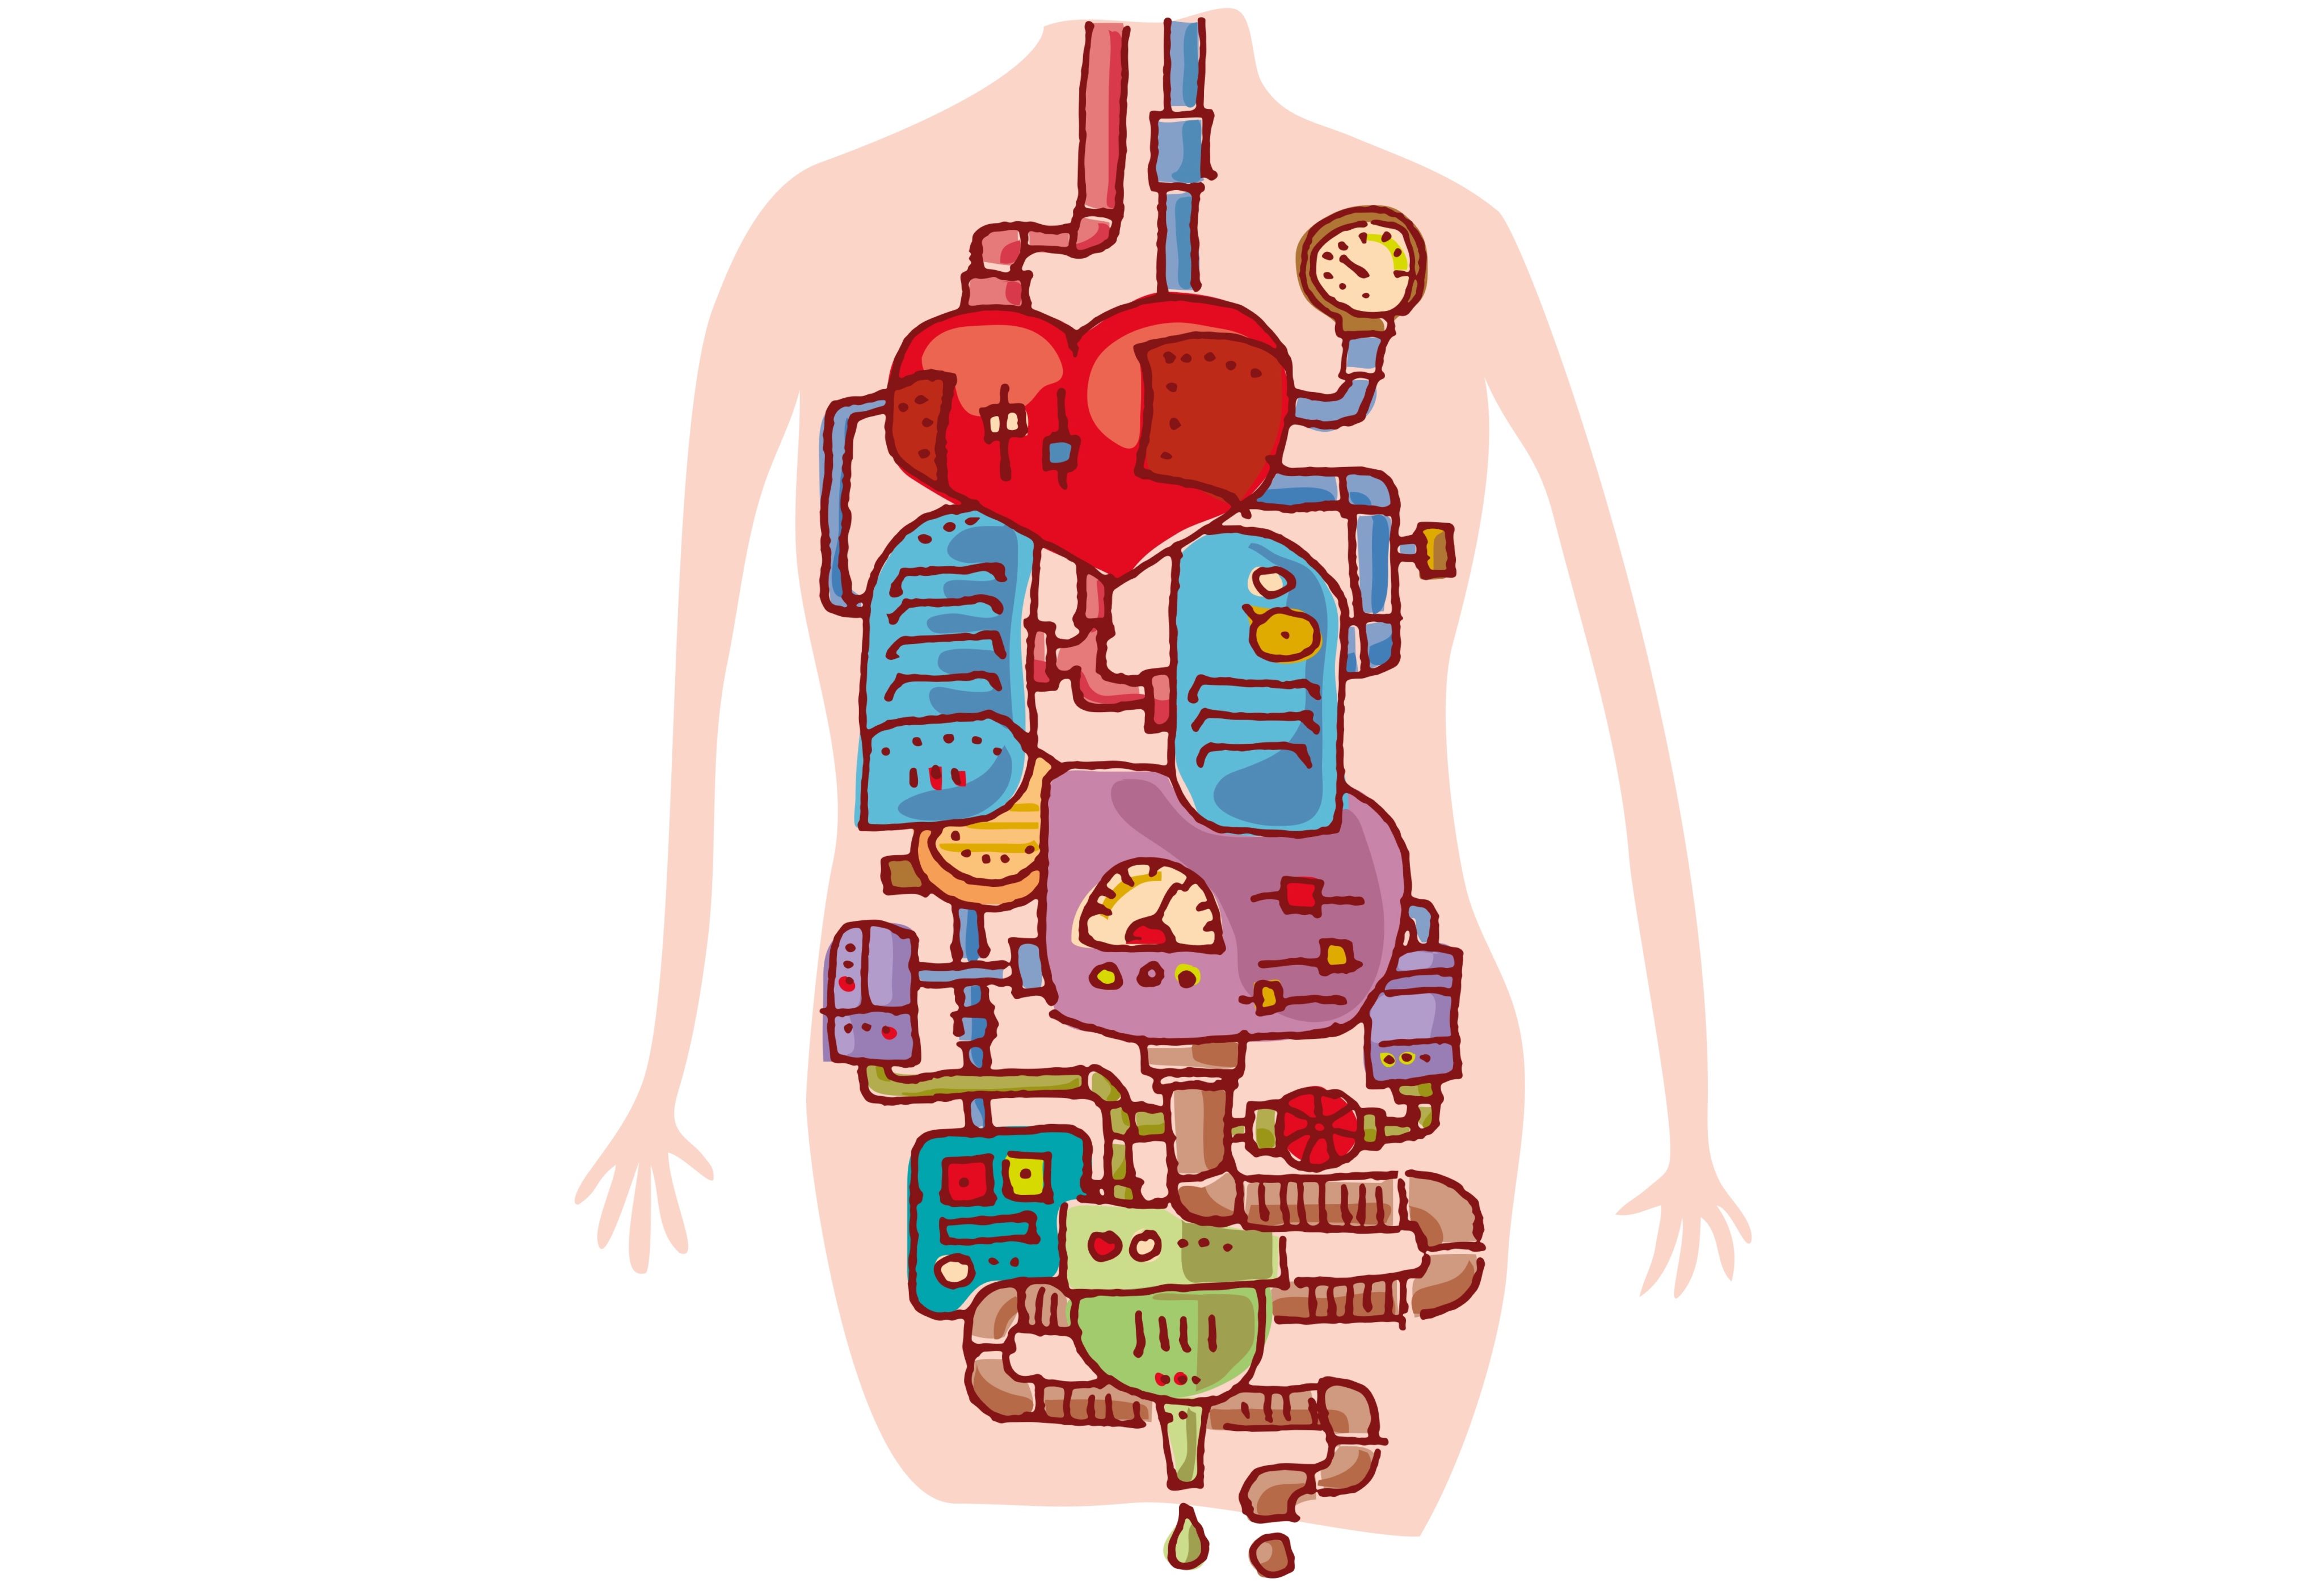 Gesundheit Stress: Körper Organe Leitungen